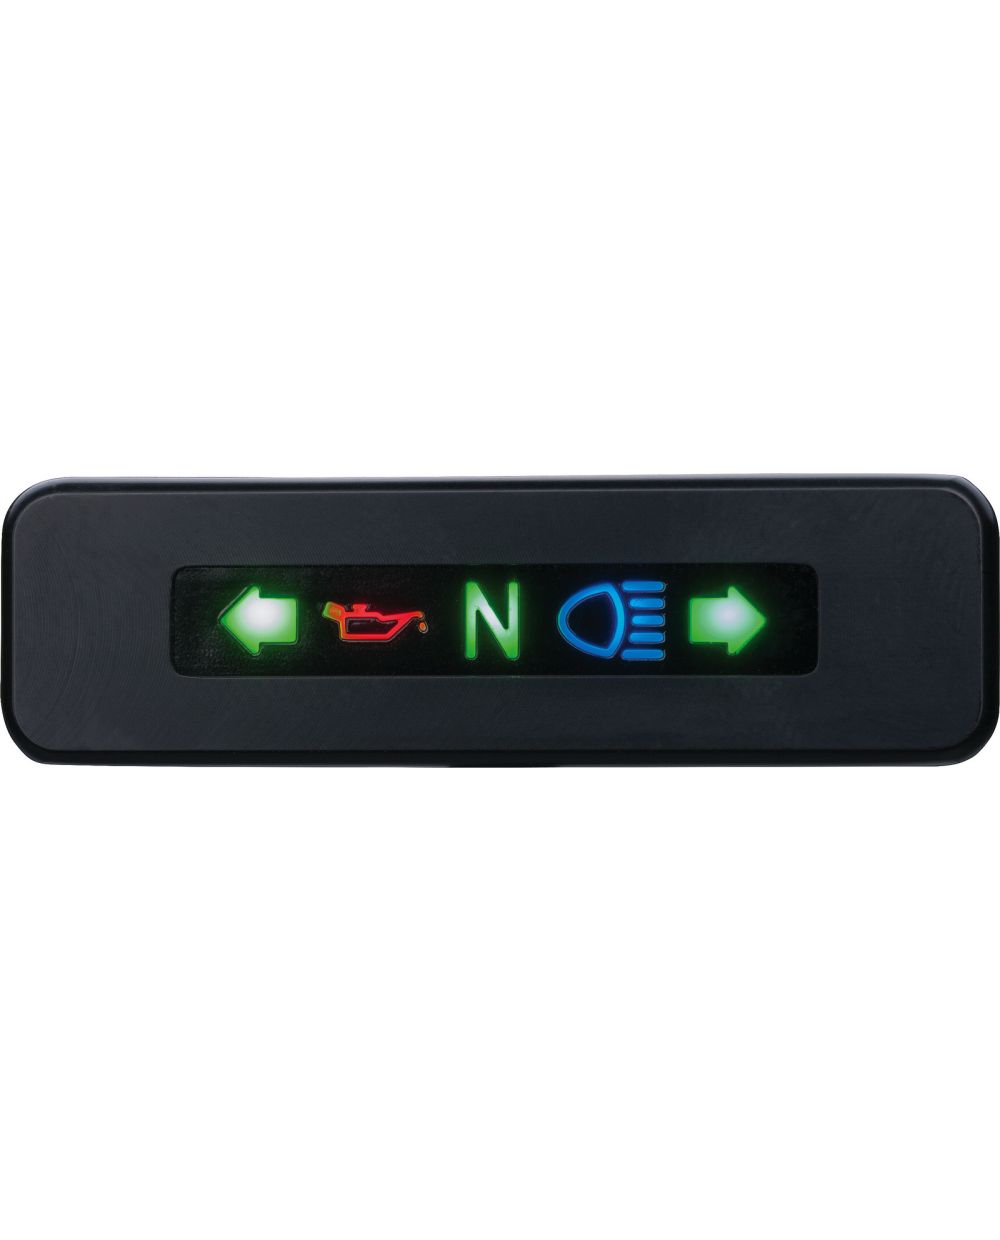 Daytona 12V LED-Kontrollleuchten Micro 'BETA', wasserdicht, 5 Piktogramme  grün/rot/grün/blau/grün, Abm. 47x14x12mm, schwarzes Gehäuse